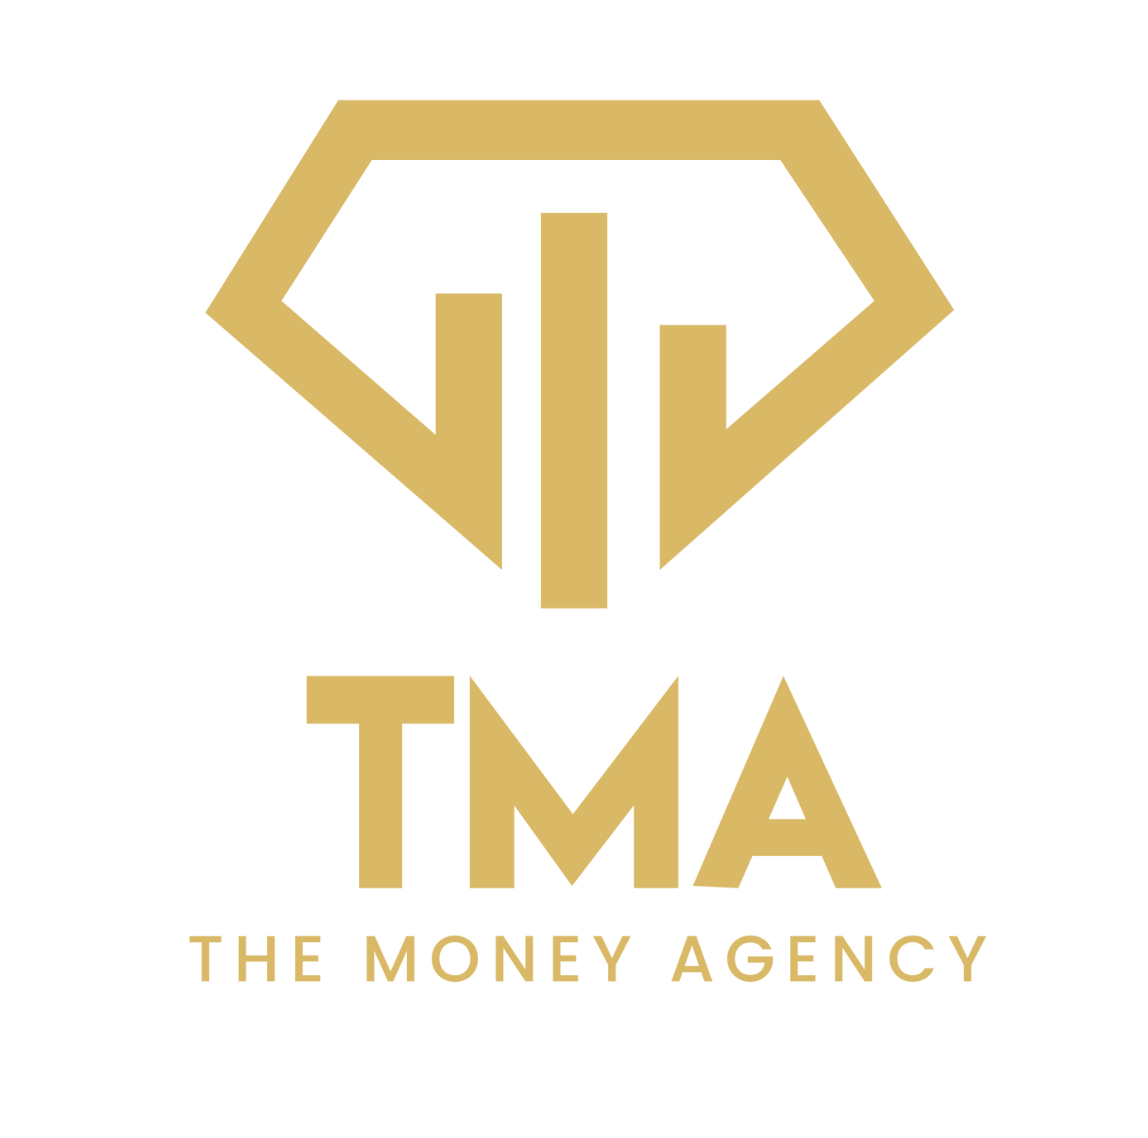 The Money Agency